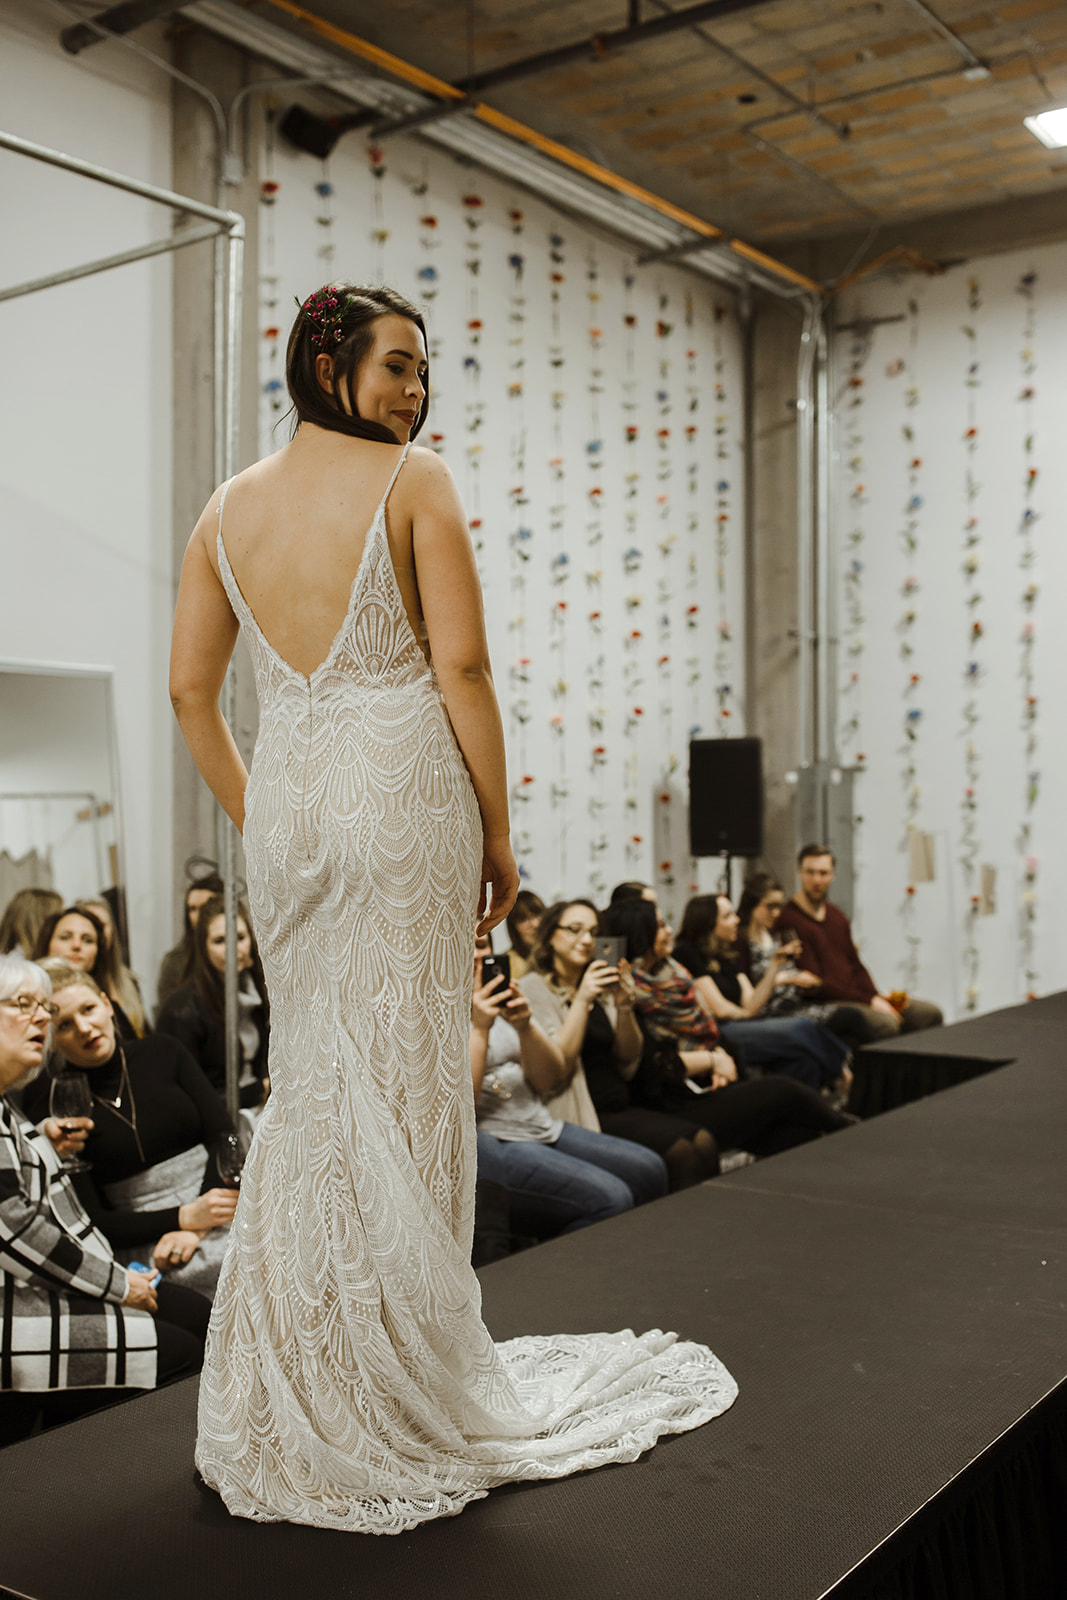 spokane wedding dress fashion show model over the shoulder glance